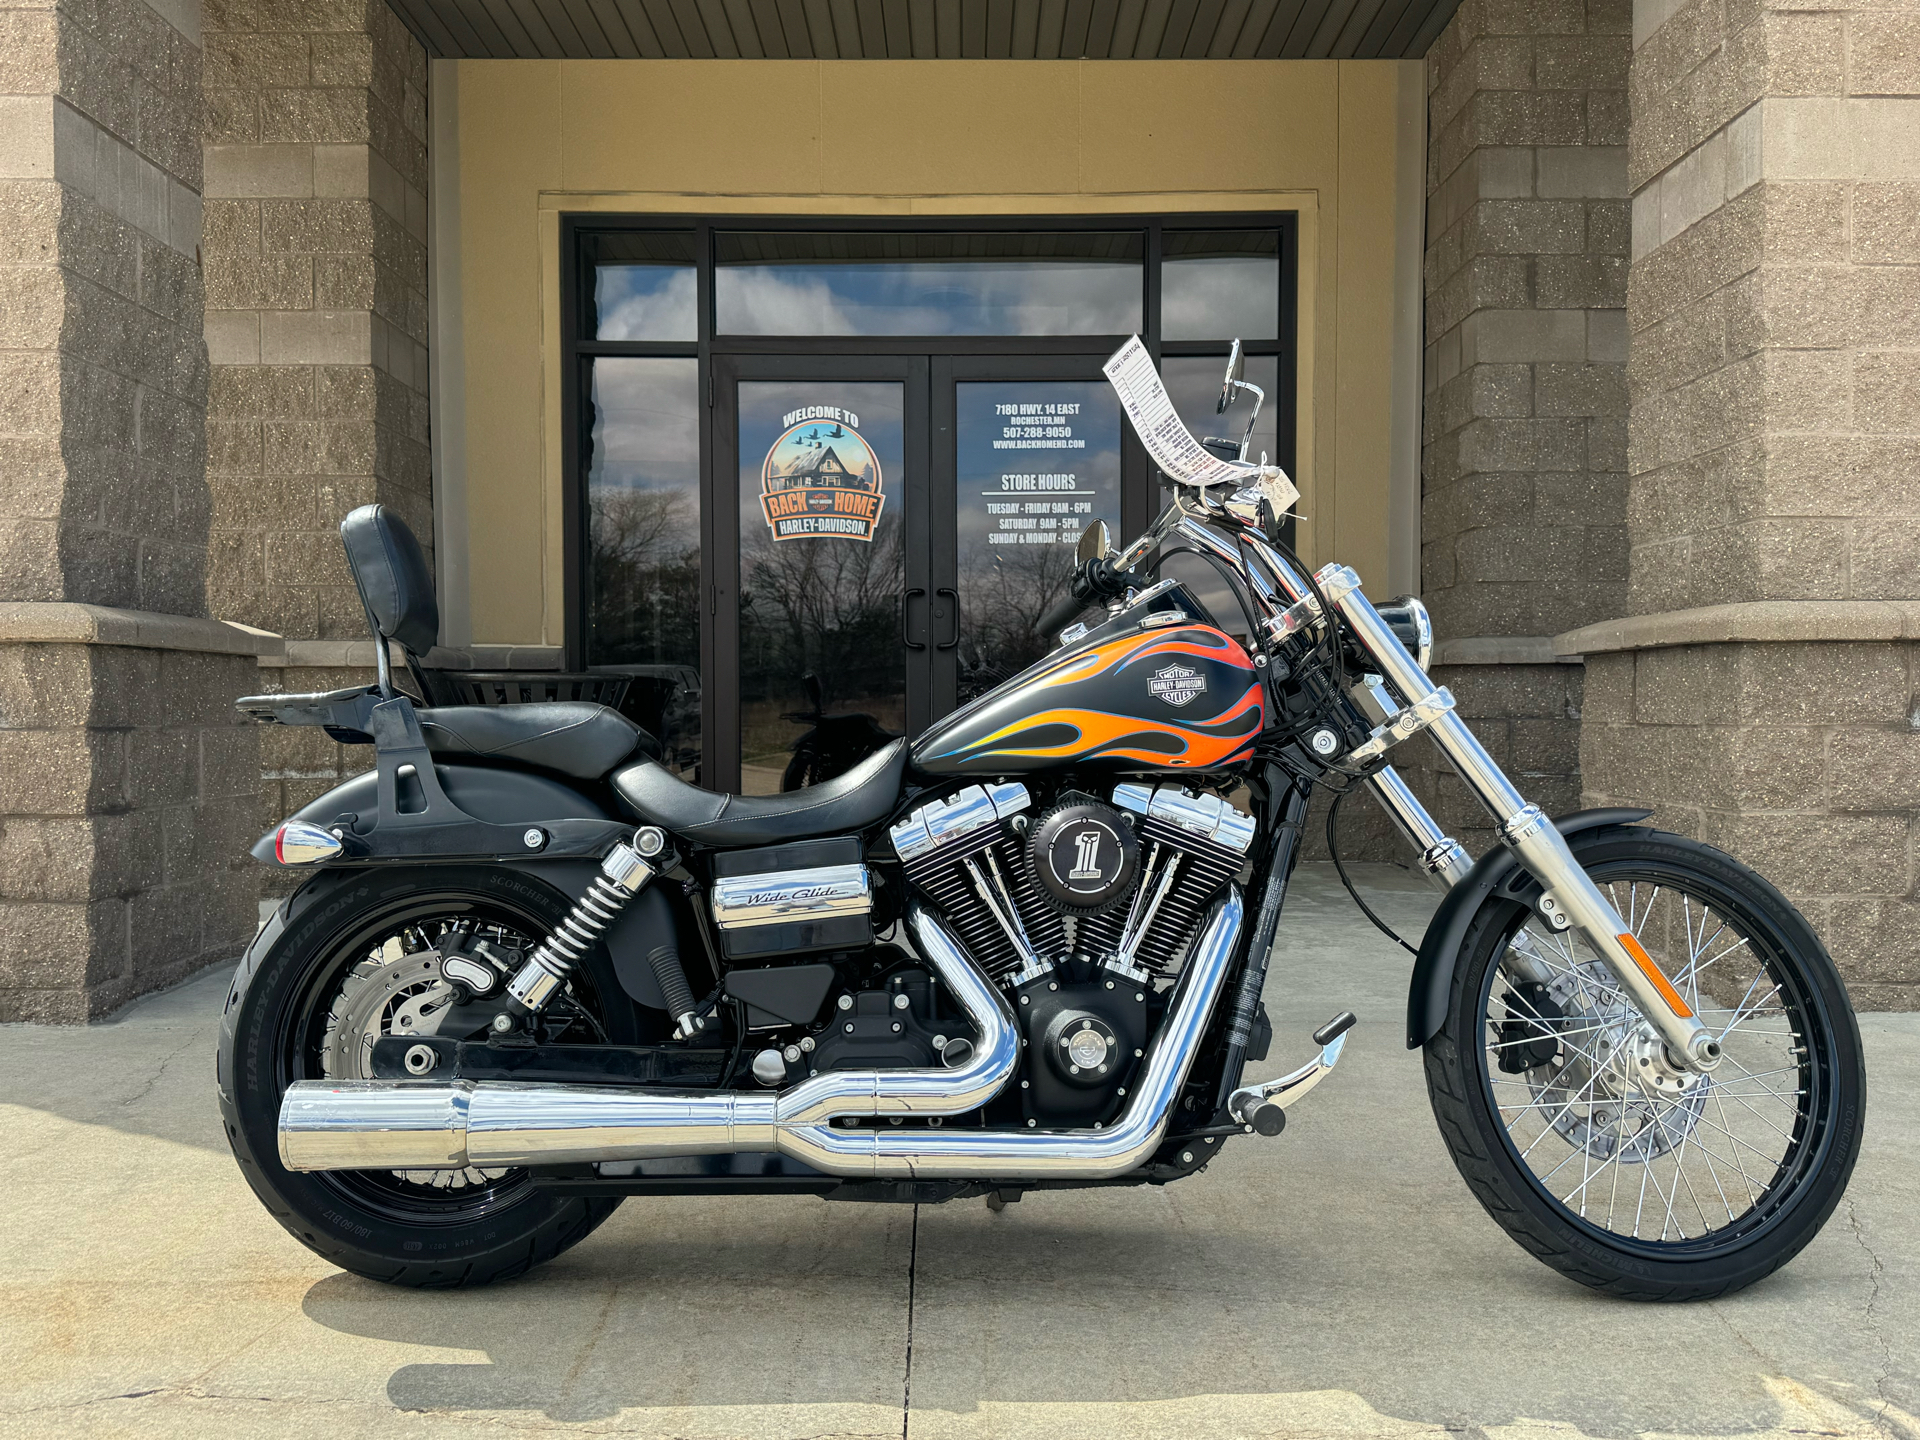 2016 Harley-Davidson Wide Glide® in Rochester, Minnesota - Photo 1